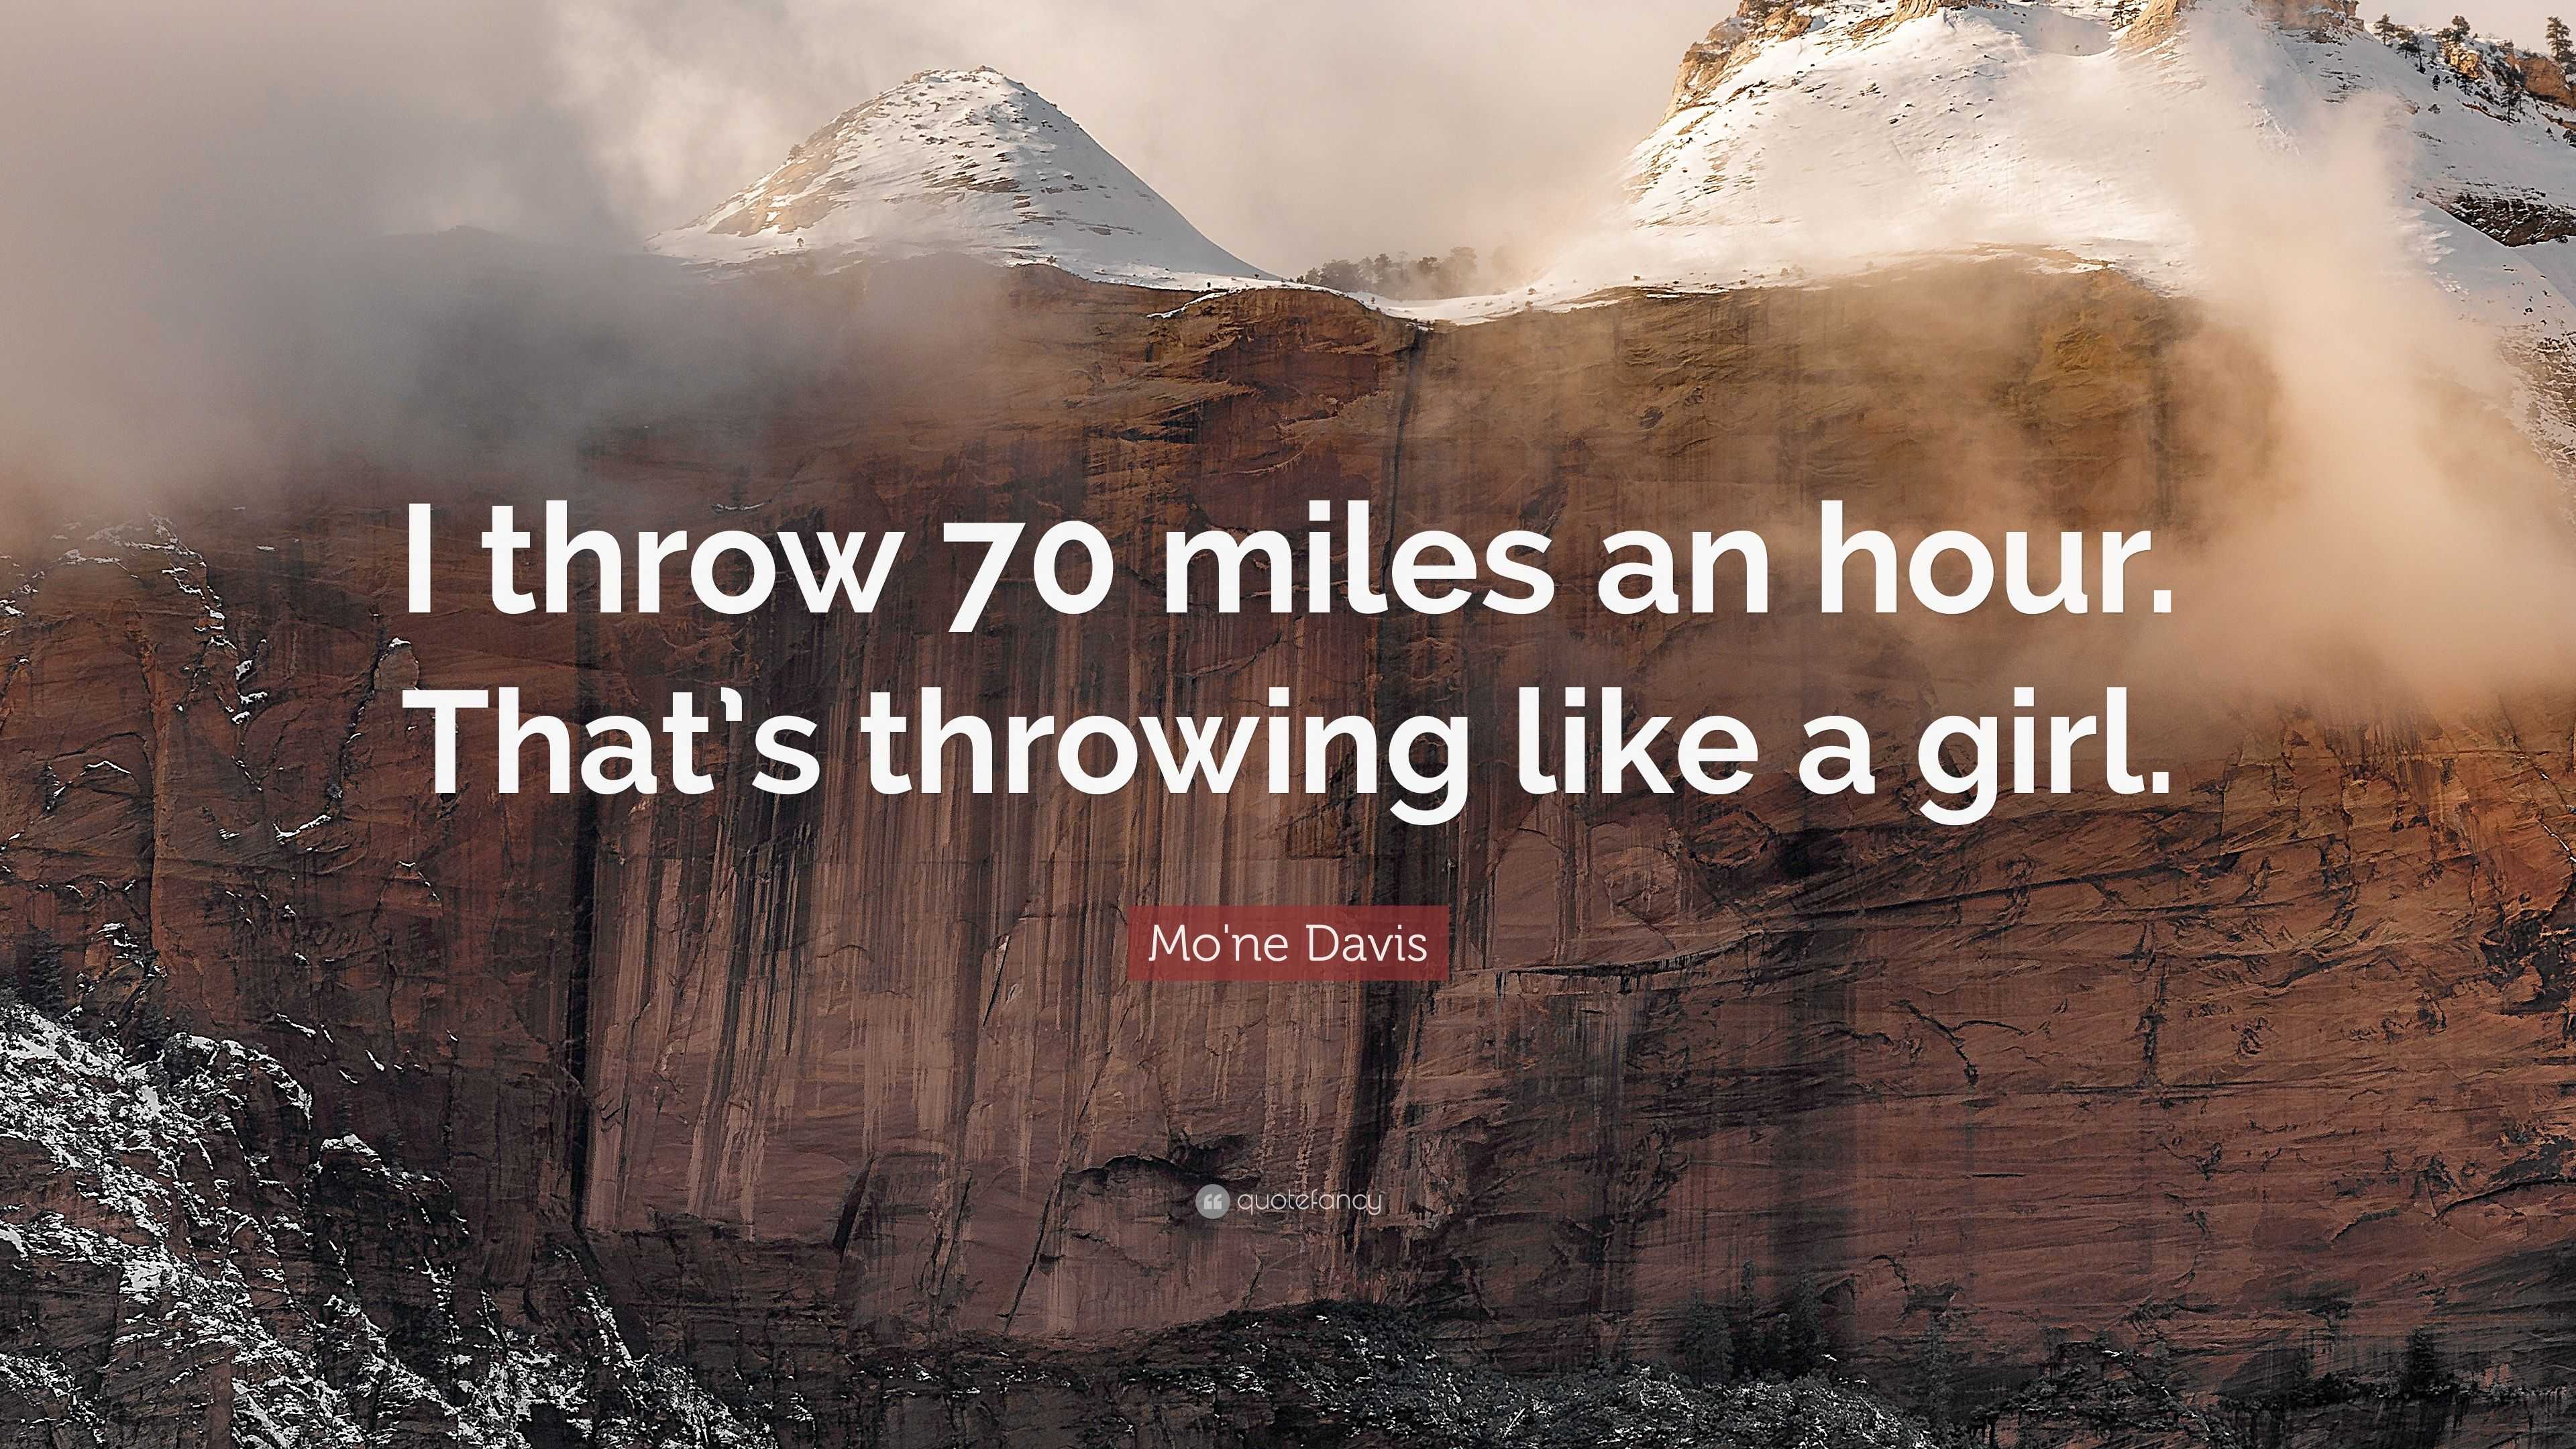 Mo'ne Davis Quote: “I throw 70 miles an hour. That's throwing like